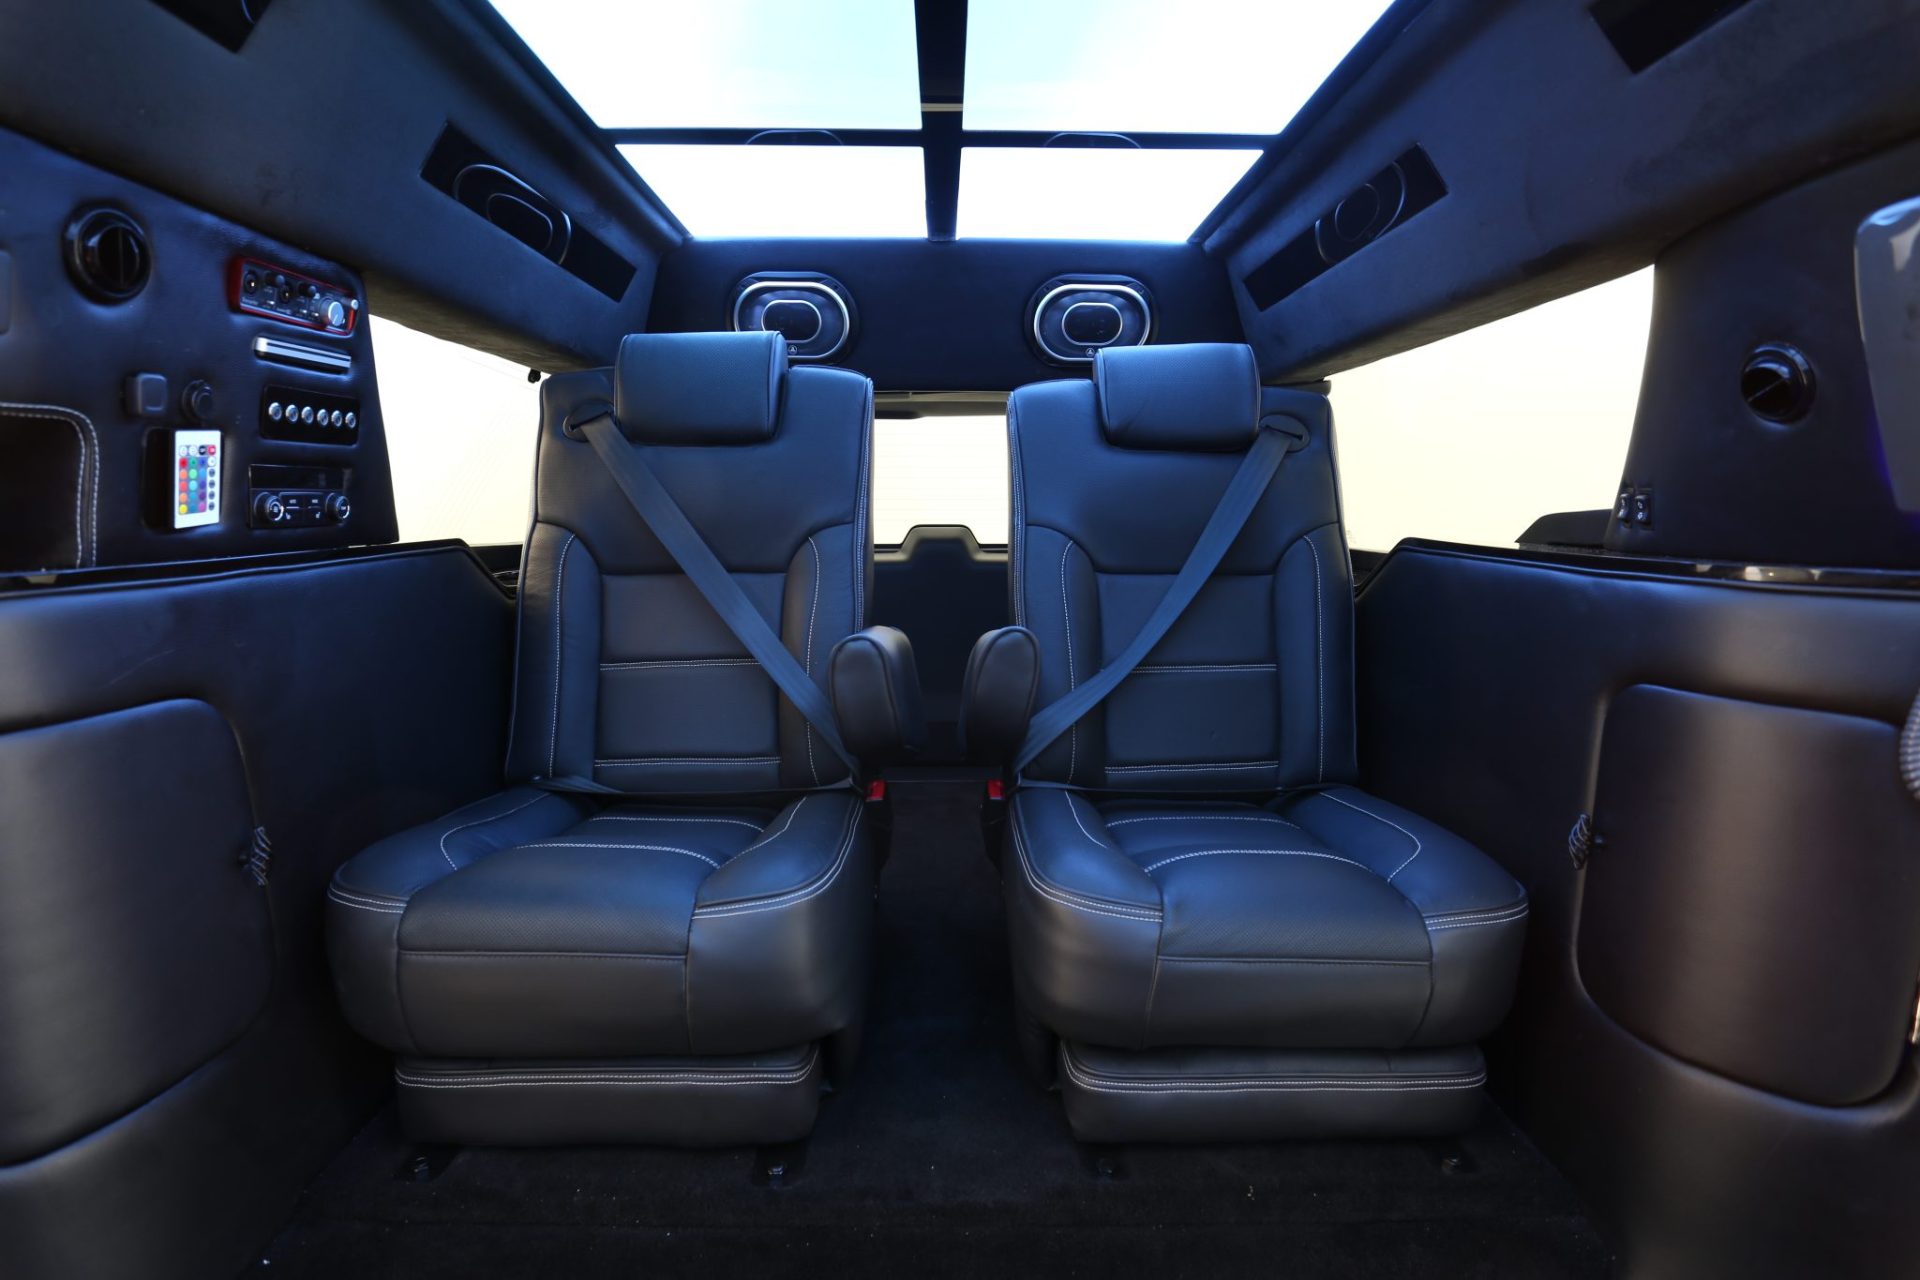 GMC Denali XL CEO Mobile Office Limousine - Interior Photo #3